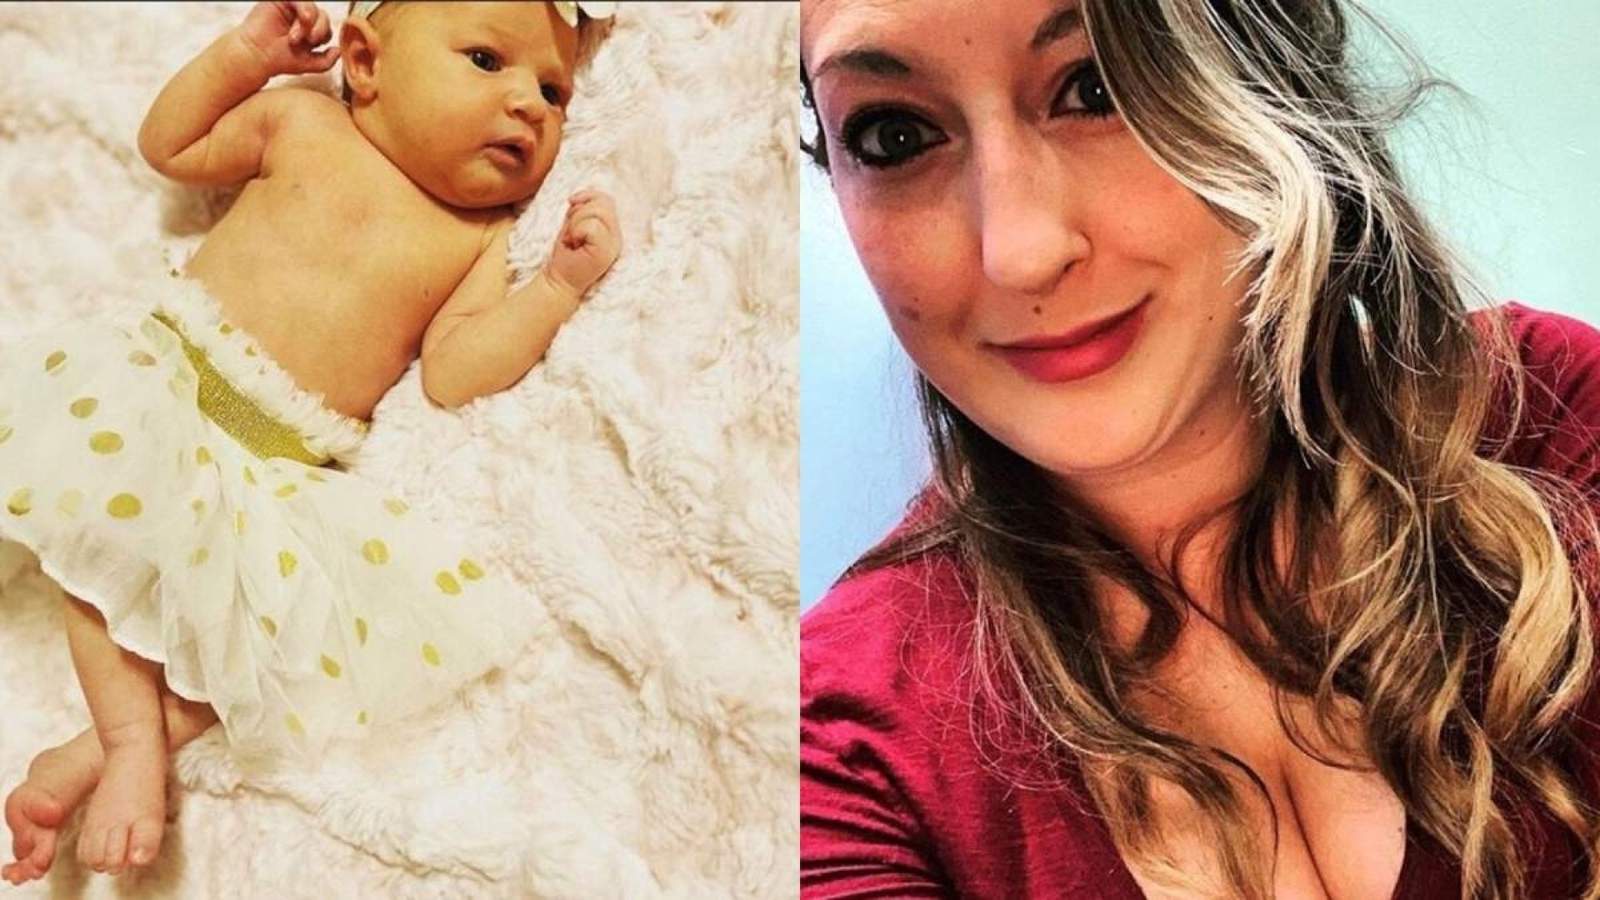 FBI joins search for Austin mom, newborn missing since last week